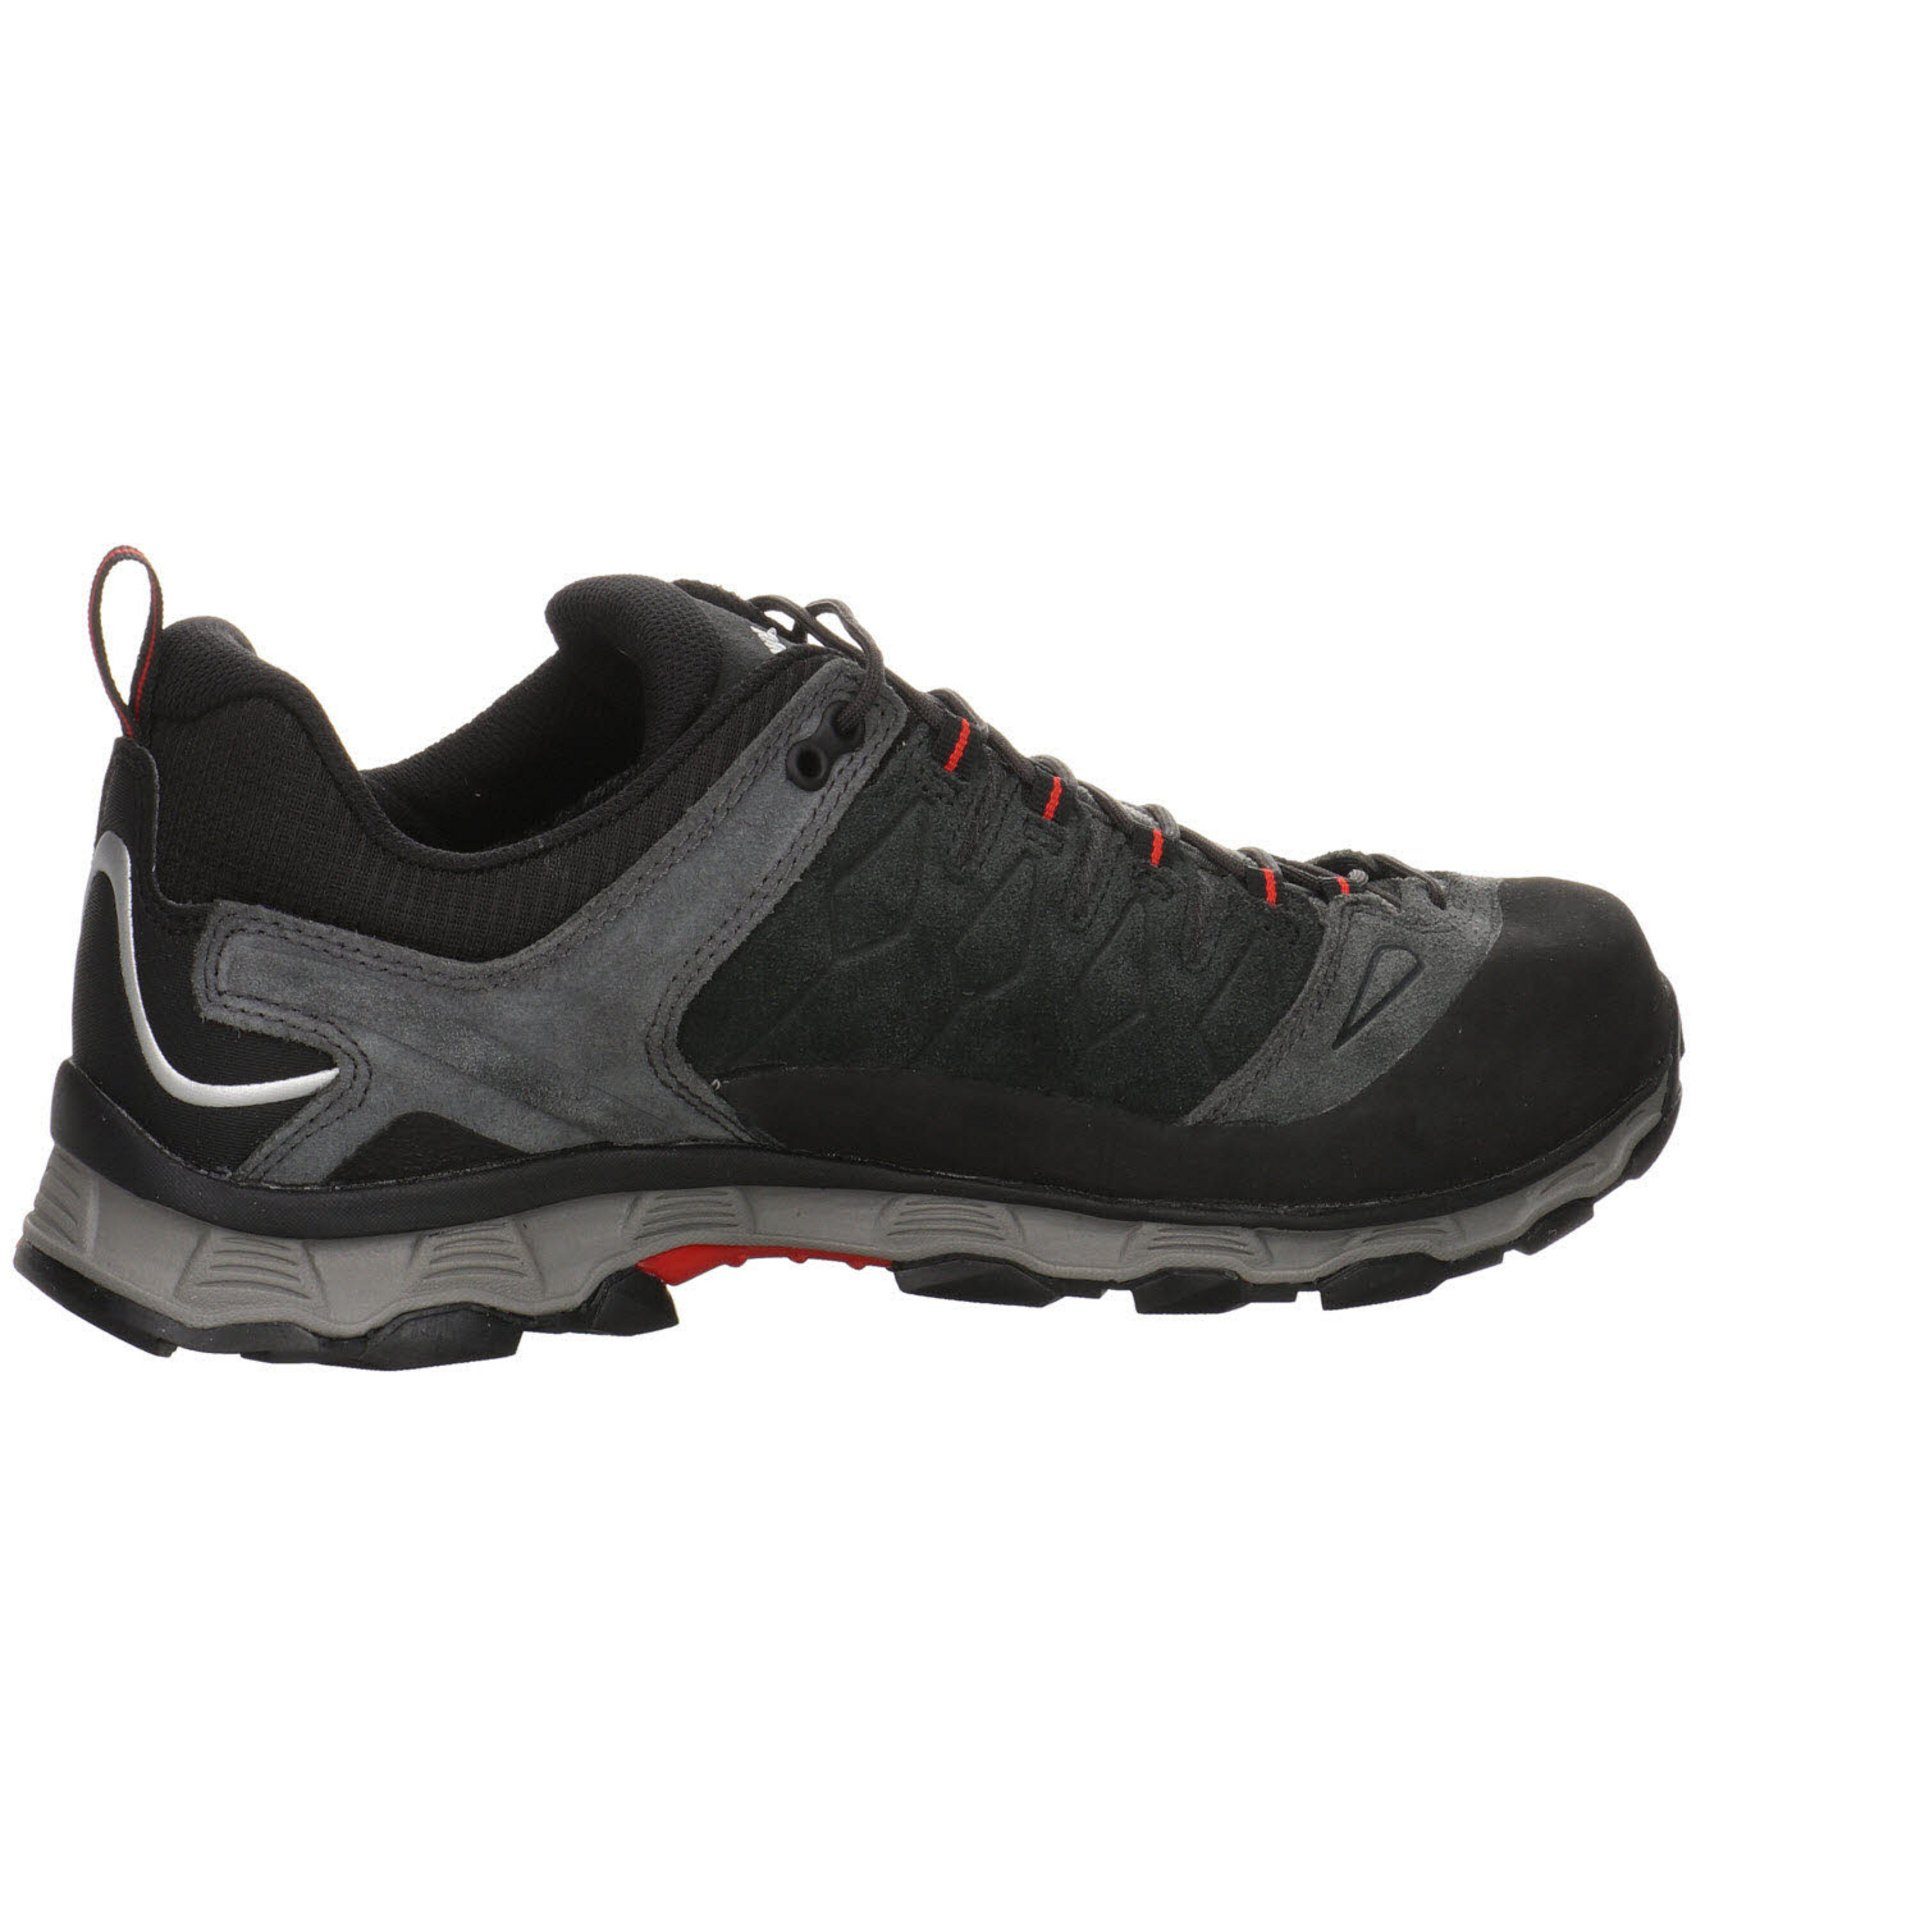 Schuhe Outdoorschuh Leder-/Textilkombination Herren Lite Trail kombiniert GTX schwarz Outdoorschuh m Outdoor Meindl